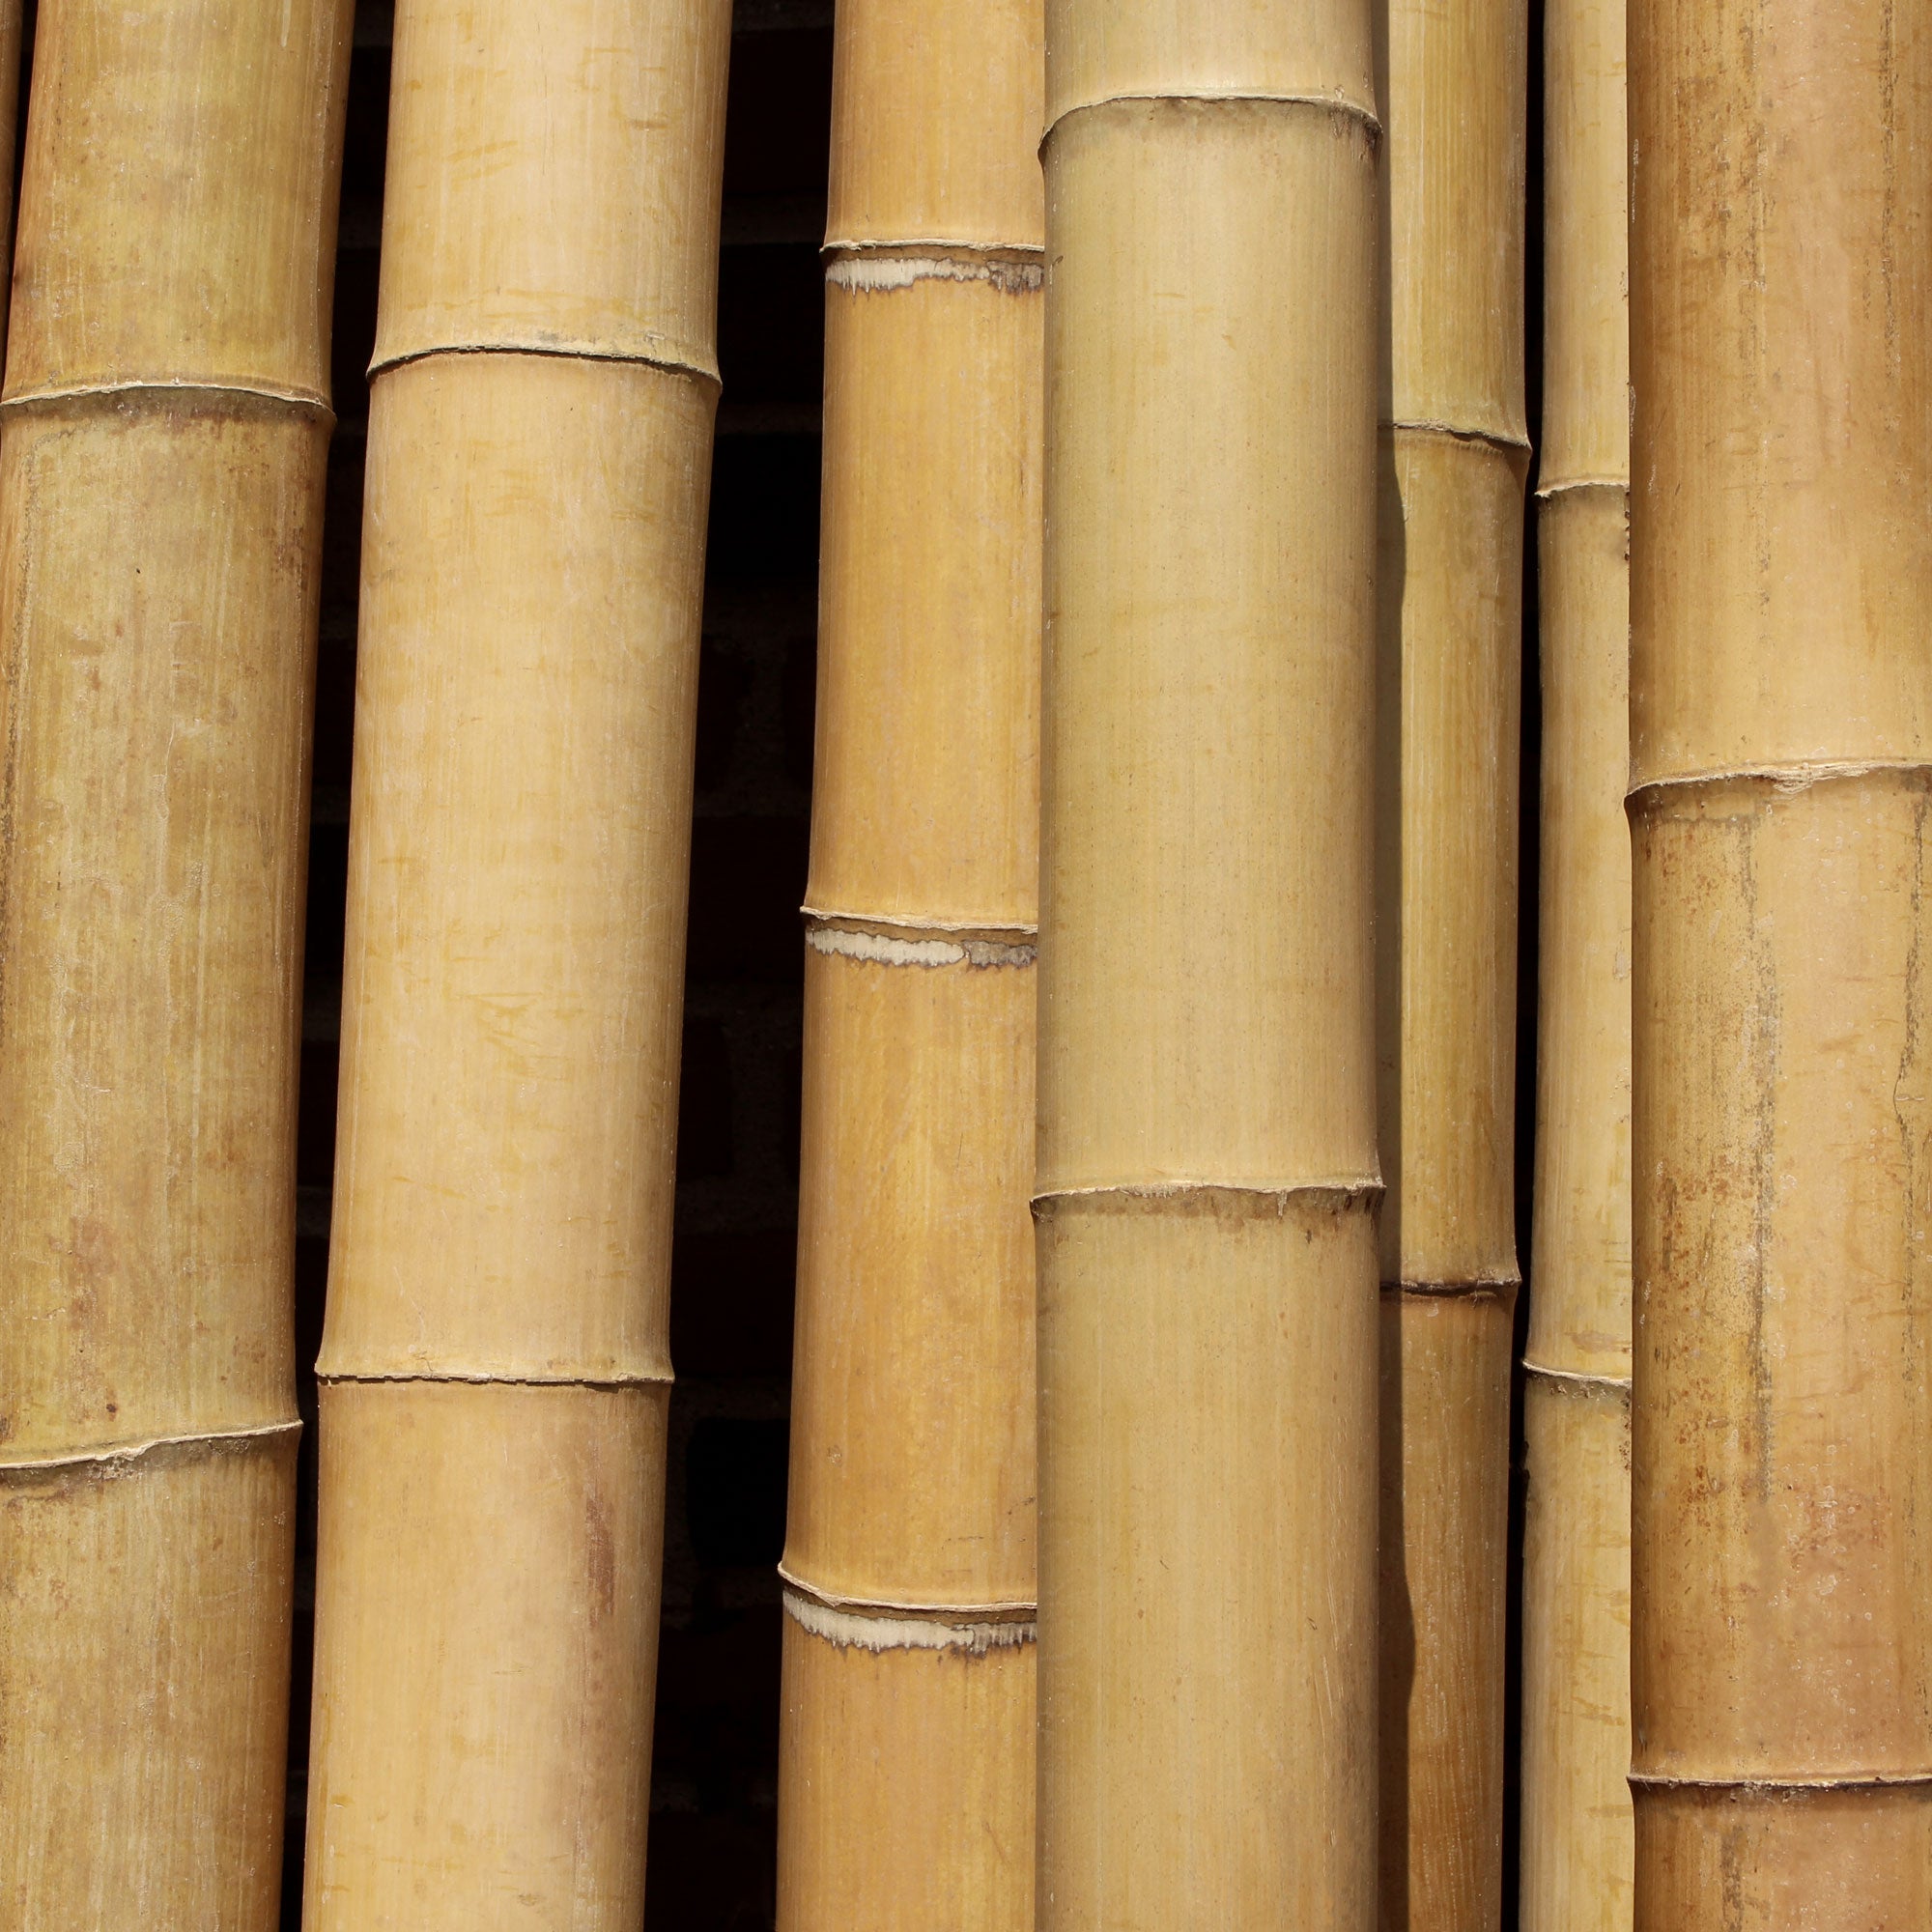 Thick Bamboo Poles, 10 Feet Long